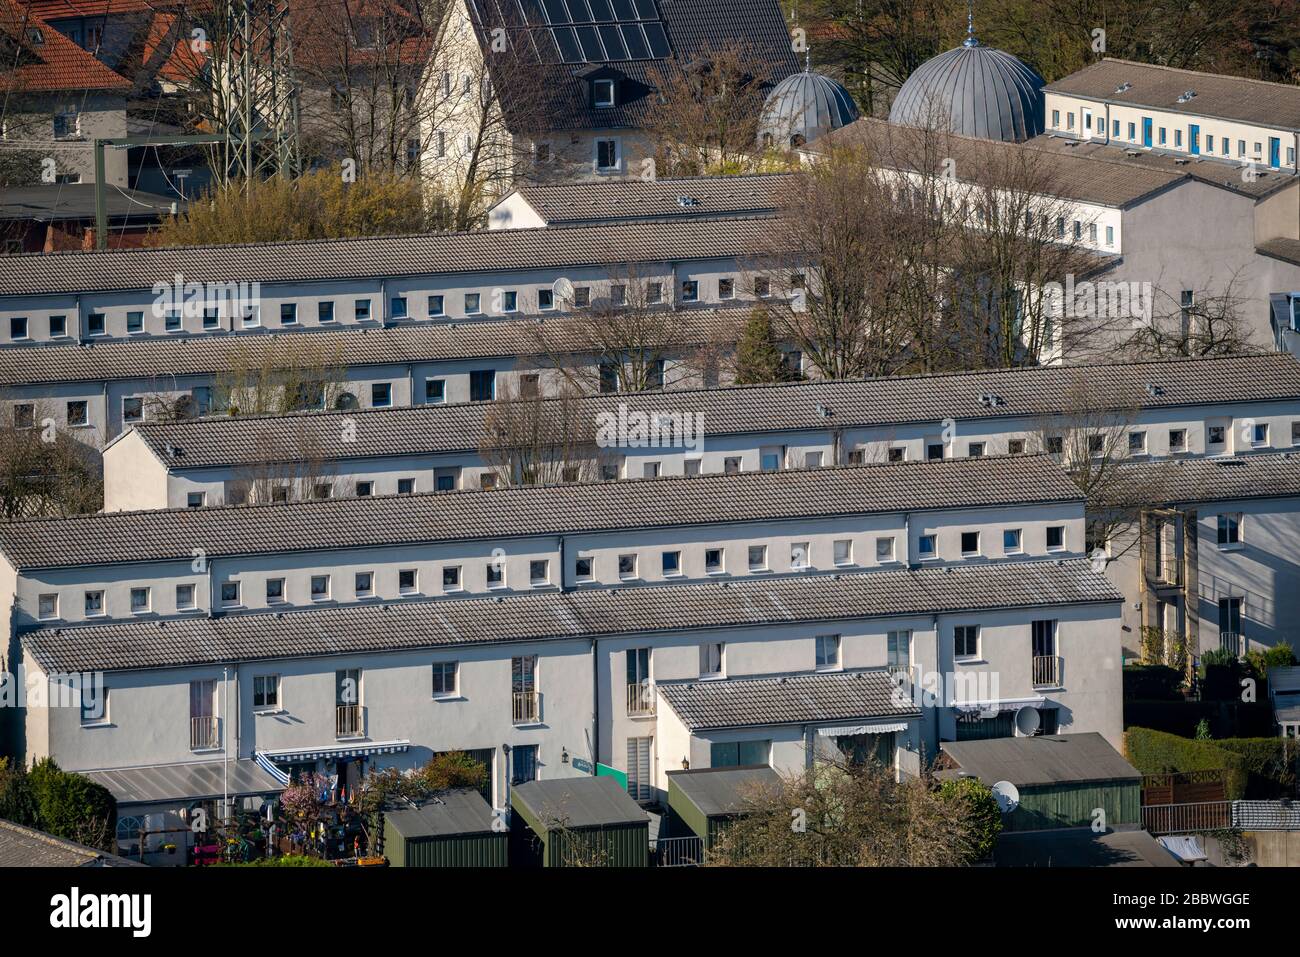 SchŸngelberg housing estate, new development, built in 1993 as part of the IBA, Gelsenkirchen, Germany Stock Photo